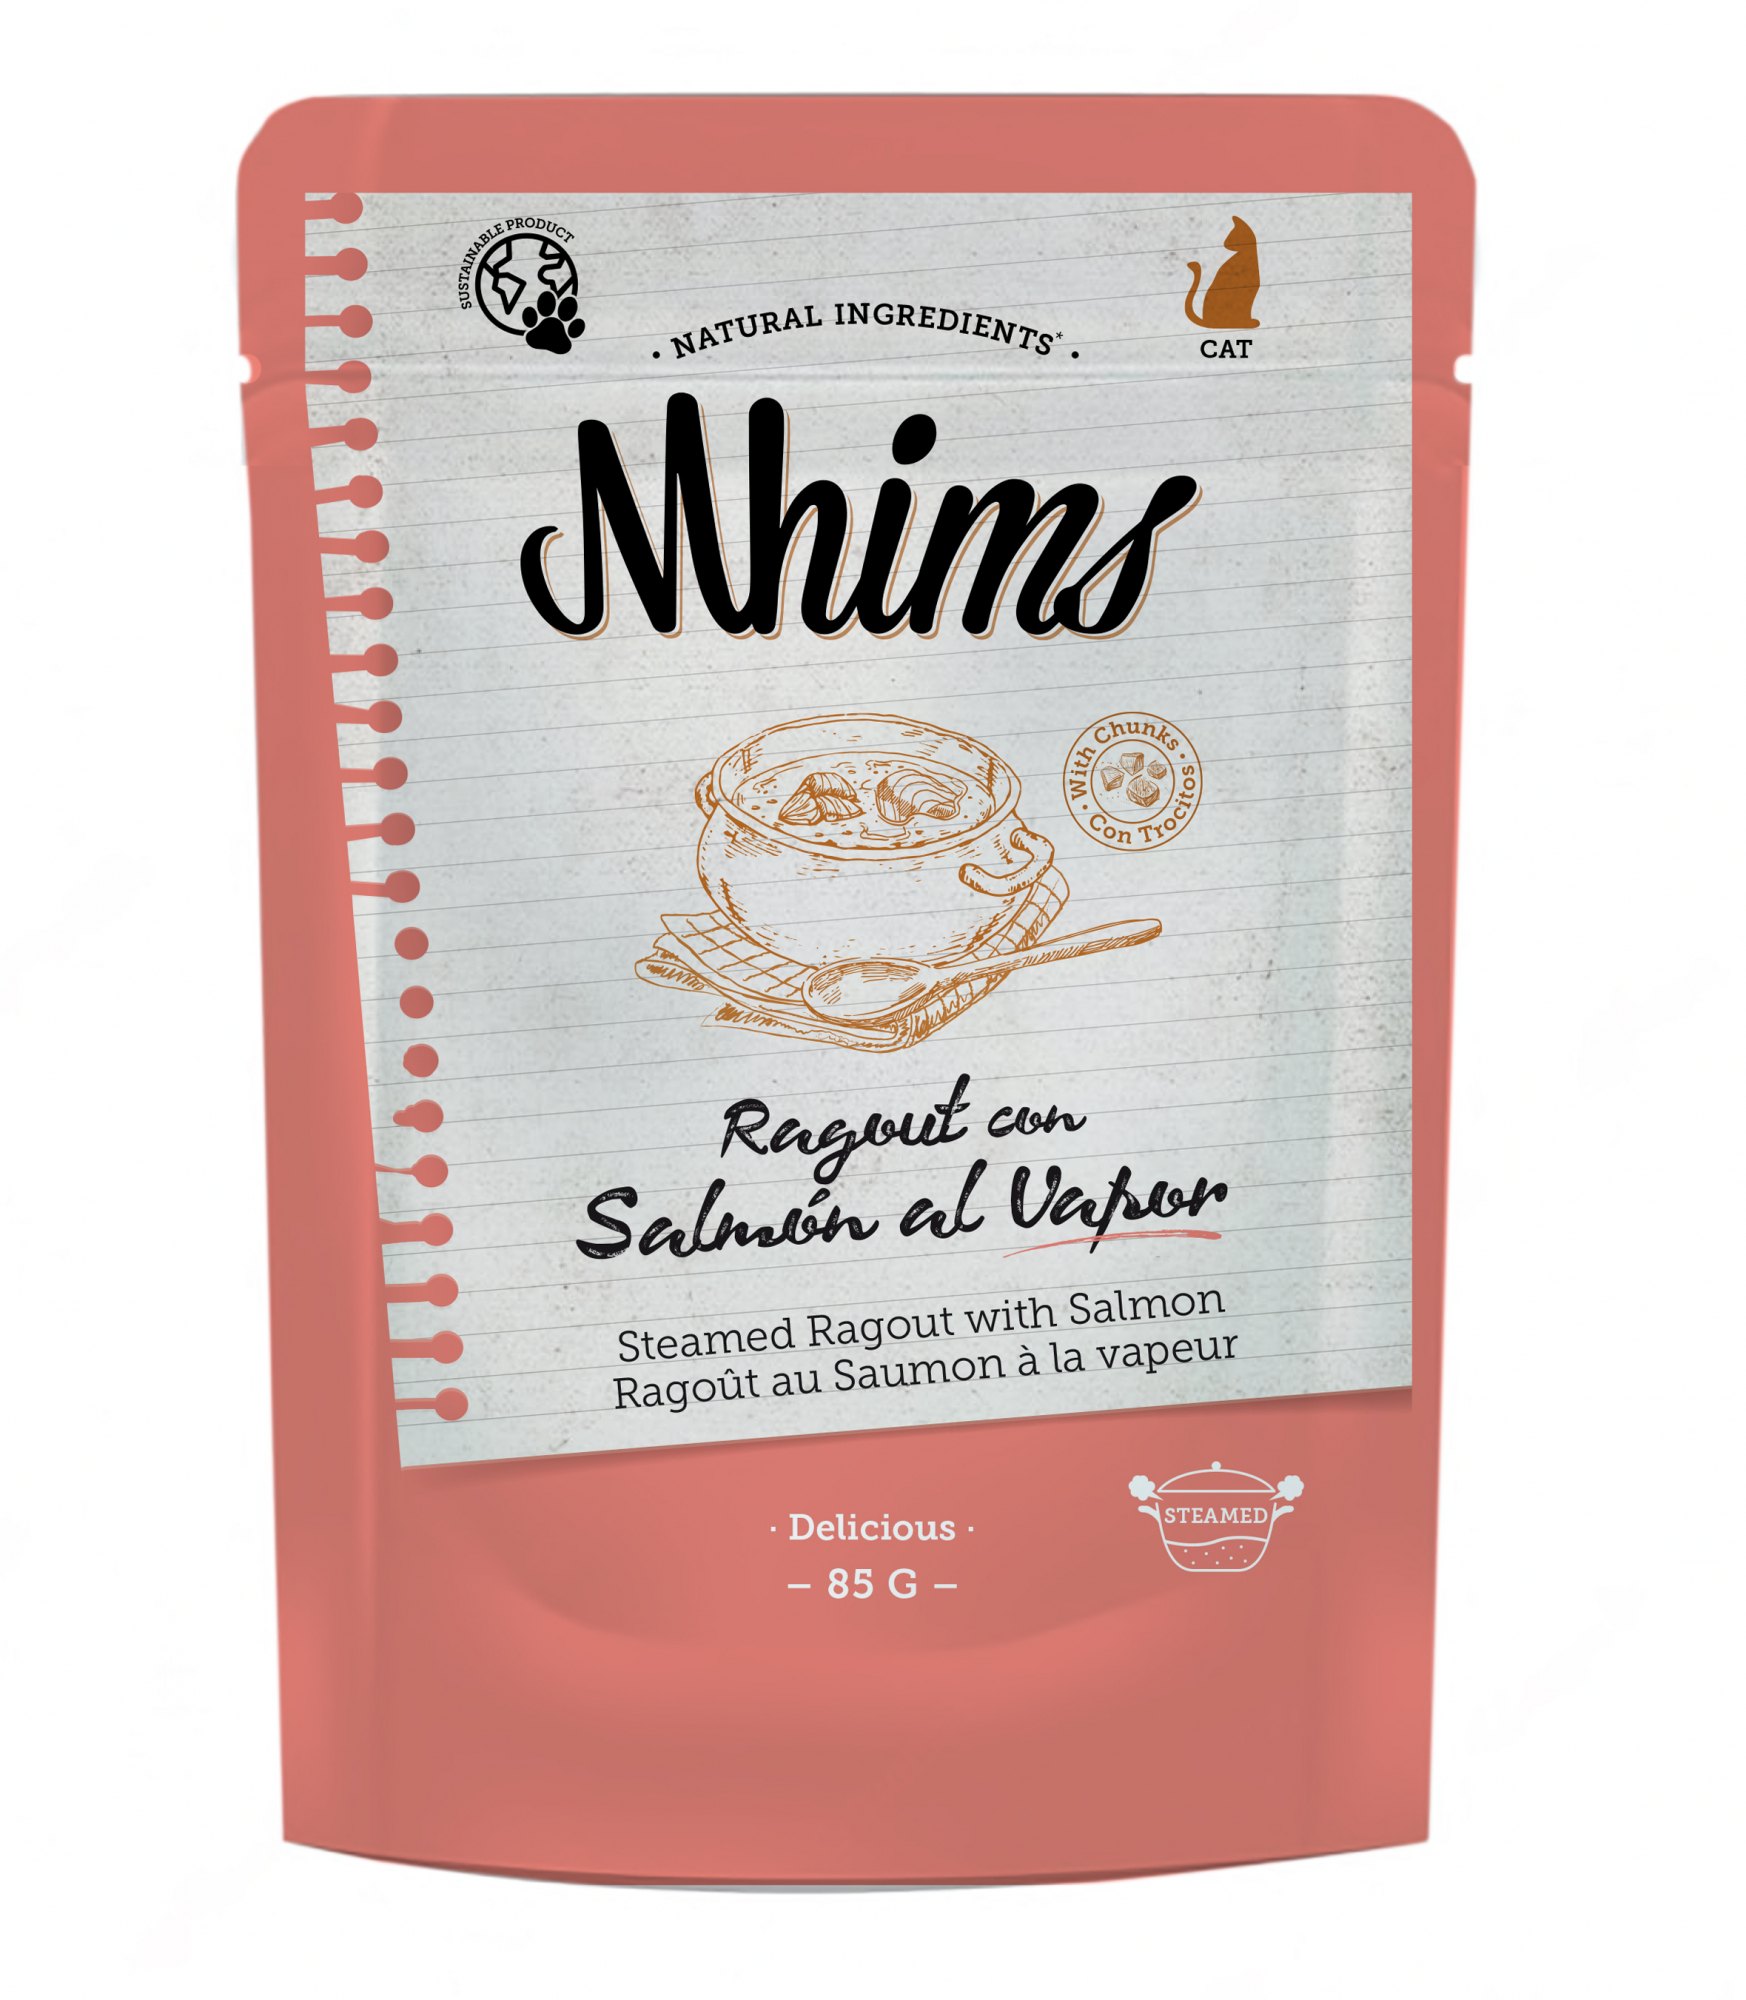 MHIMS Cat Ragout - Comida húmeda - varios sabores disponibles - 85g